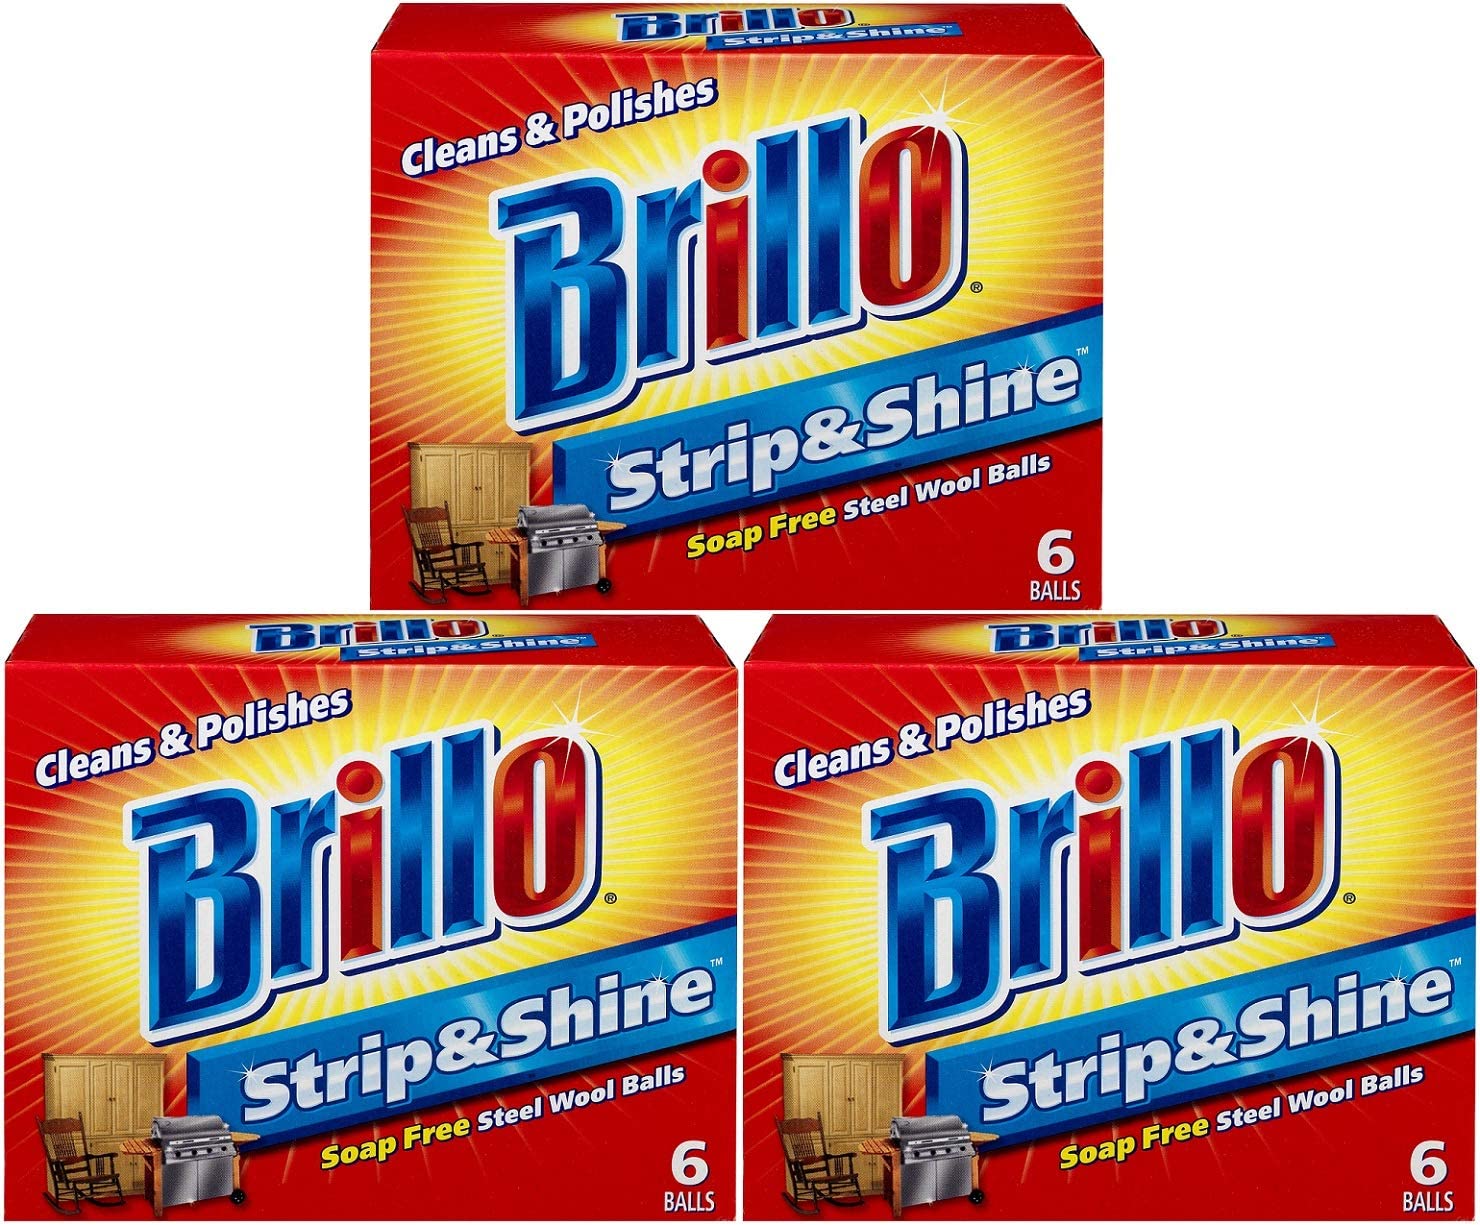 Brillo Supreme Strip & Shine Soap Free Steel Wool Balls 6 balls (Pack of 3)